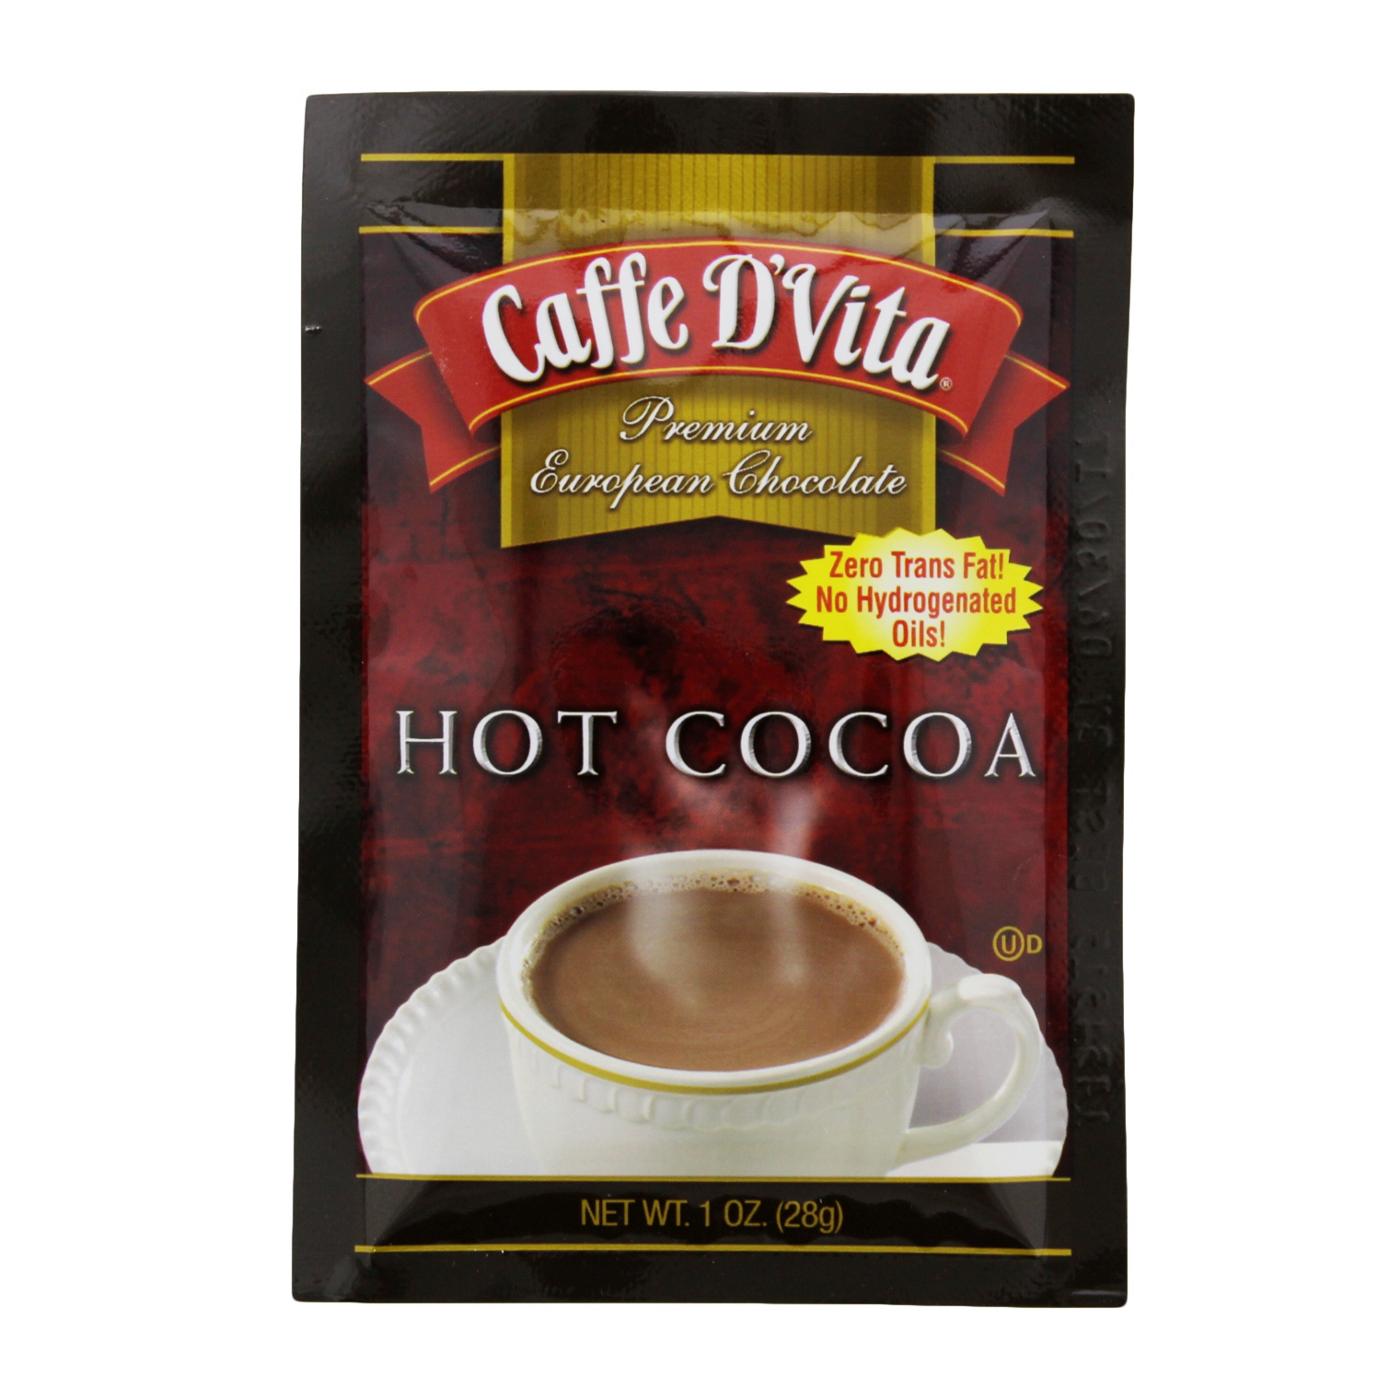 Caffe D'Vita Hot Cocoa Envelope; image 1 of 2